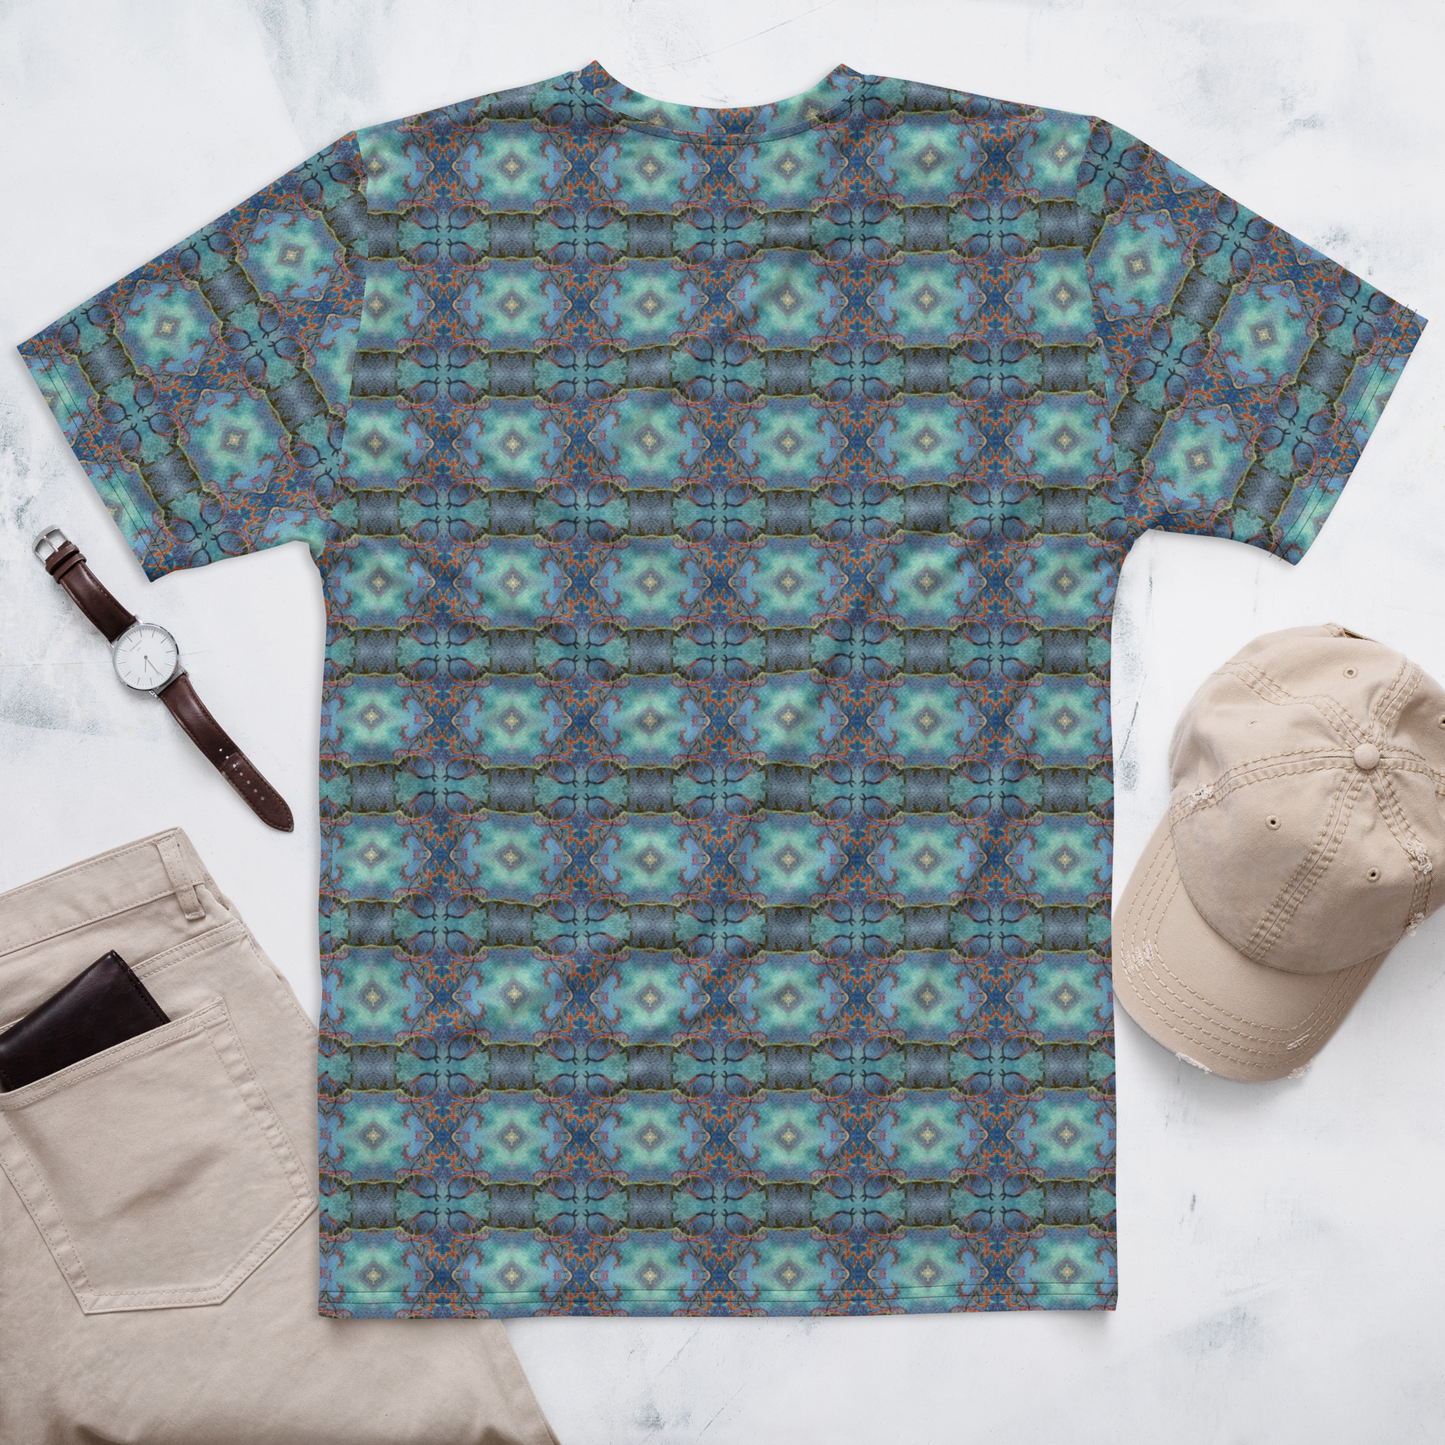 Crystalessence T-shirt